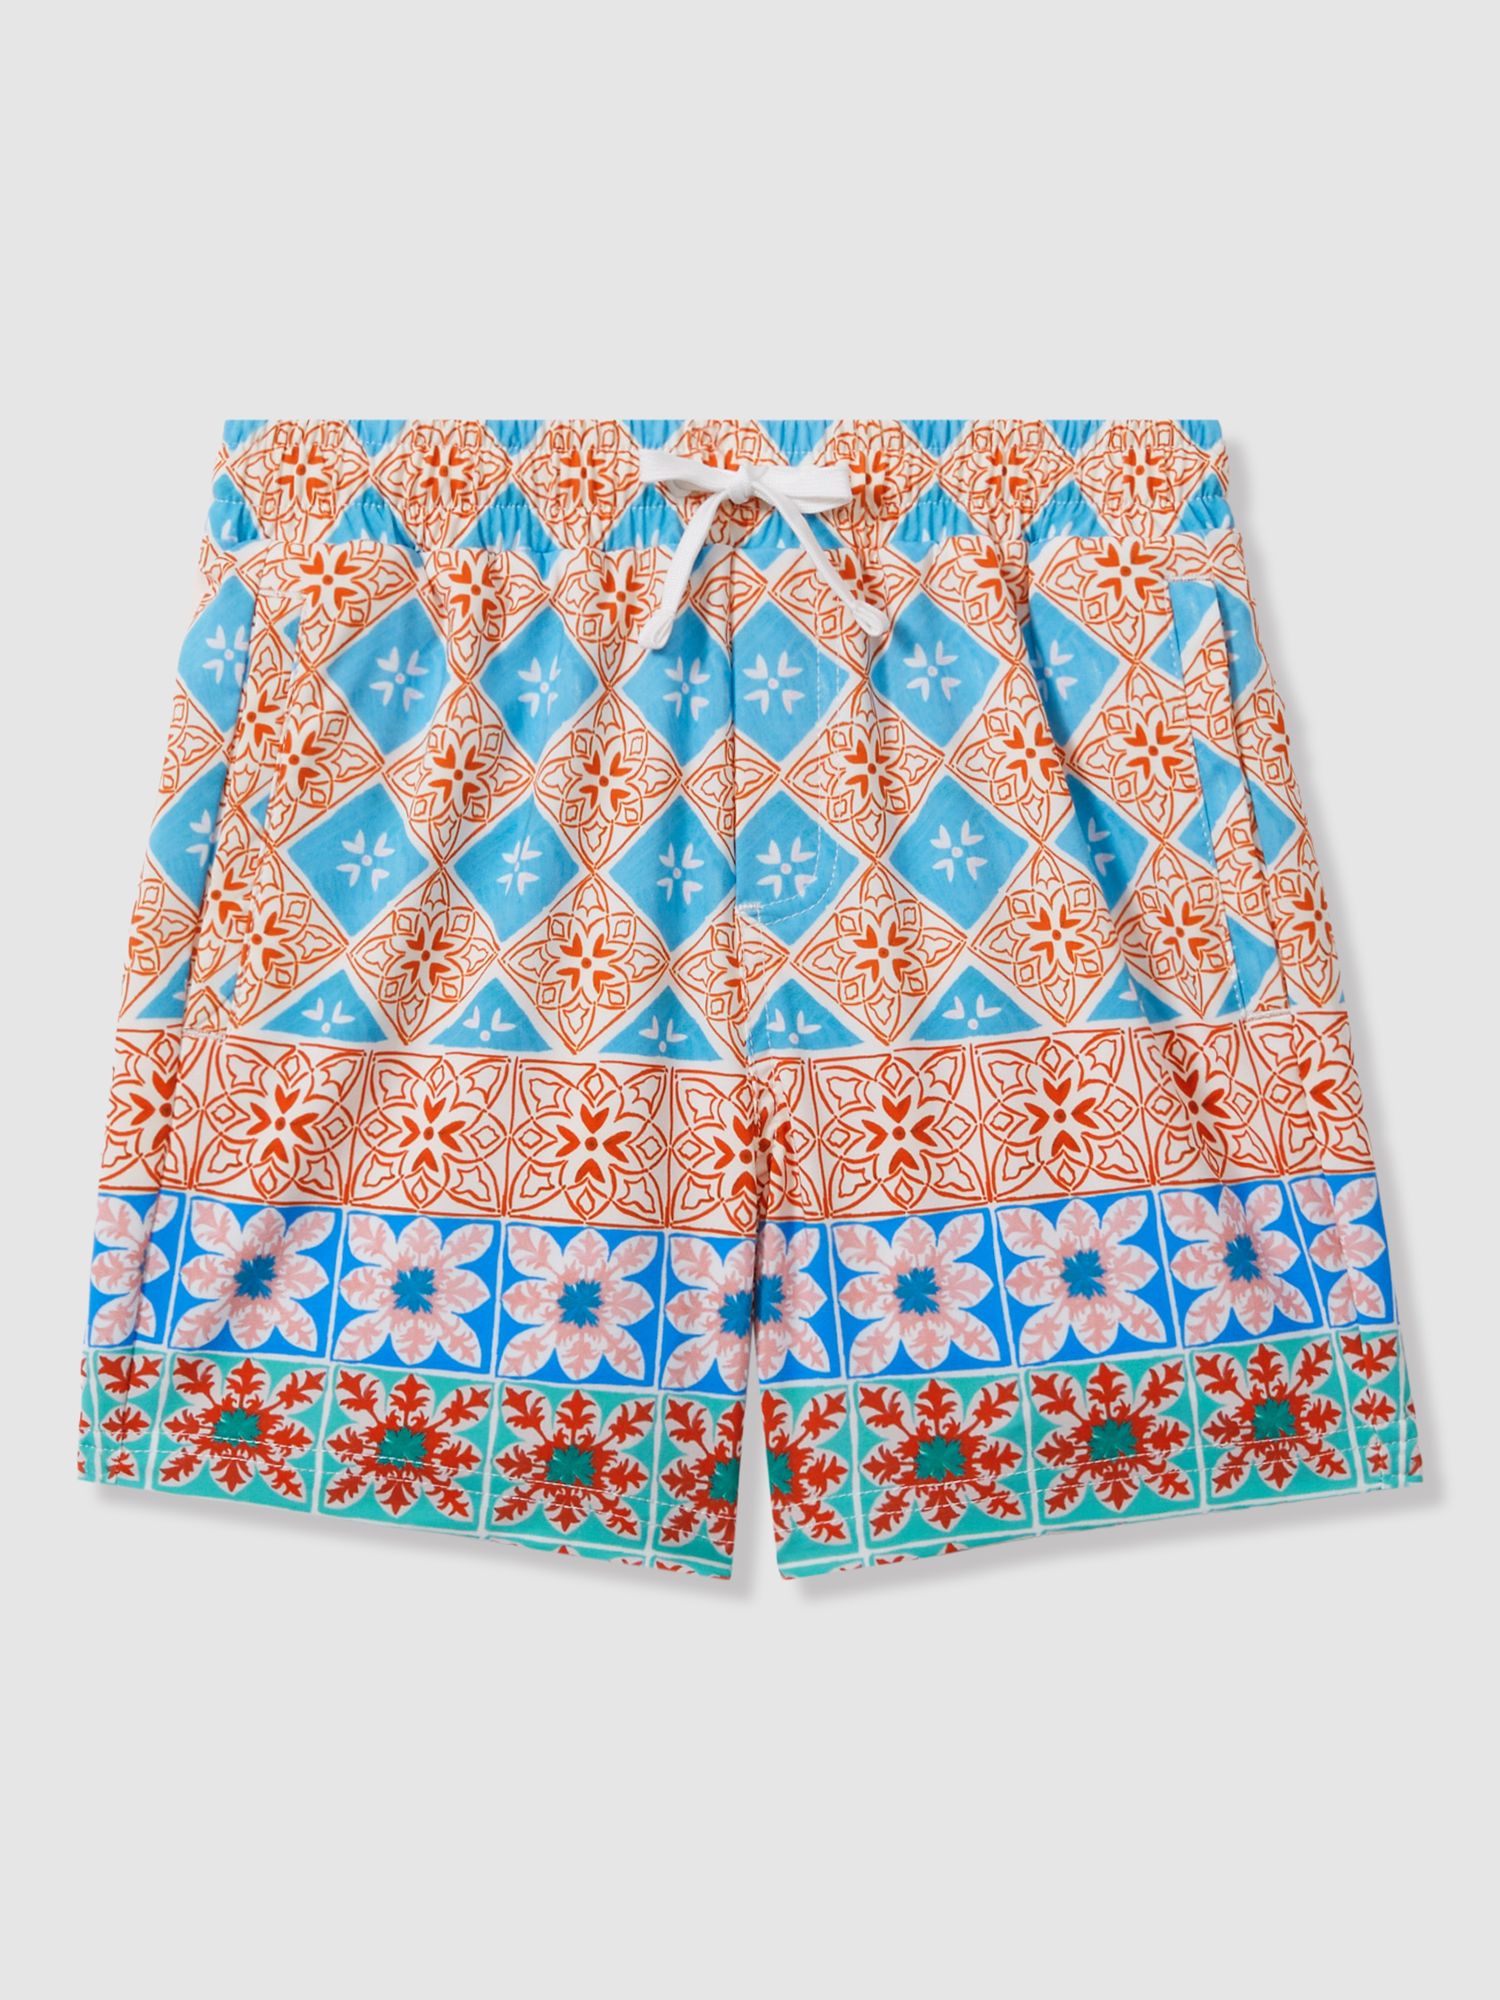 Reiss Kids' Arizona Floral Tile Print Swim Shorts, Orange/Multi, 3-4 years